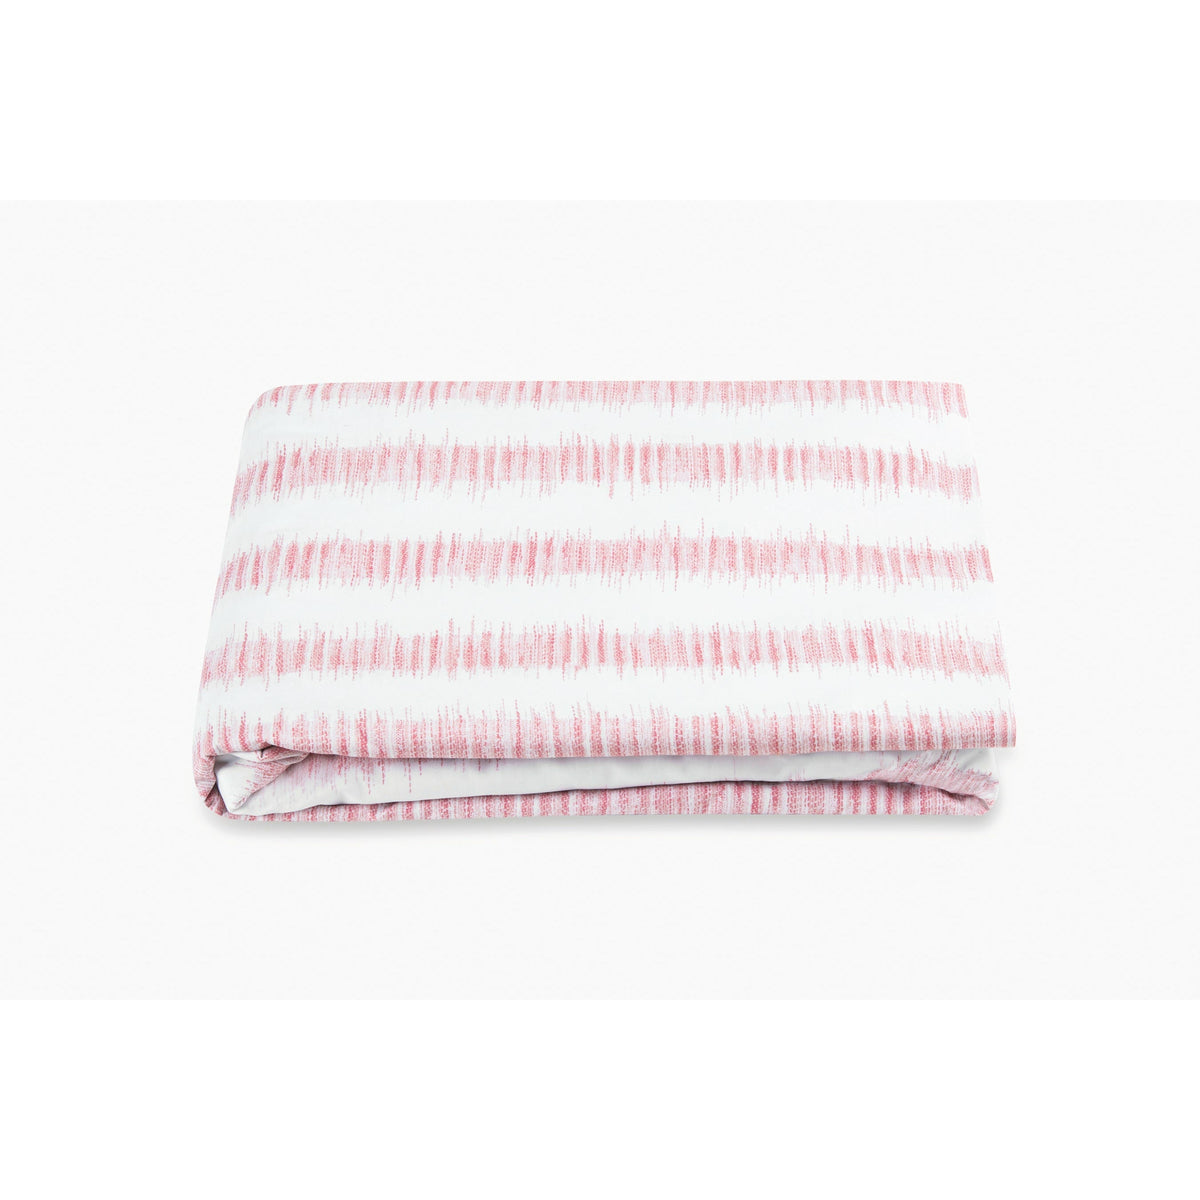 Matouk Schumacher Attleboro Bedding Fitted Sheet Pink Coral Fine Linens